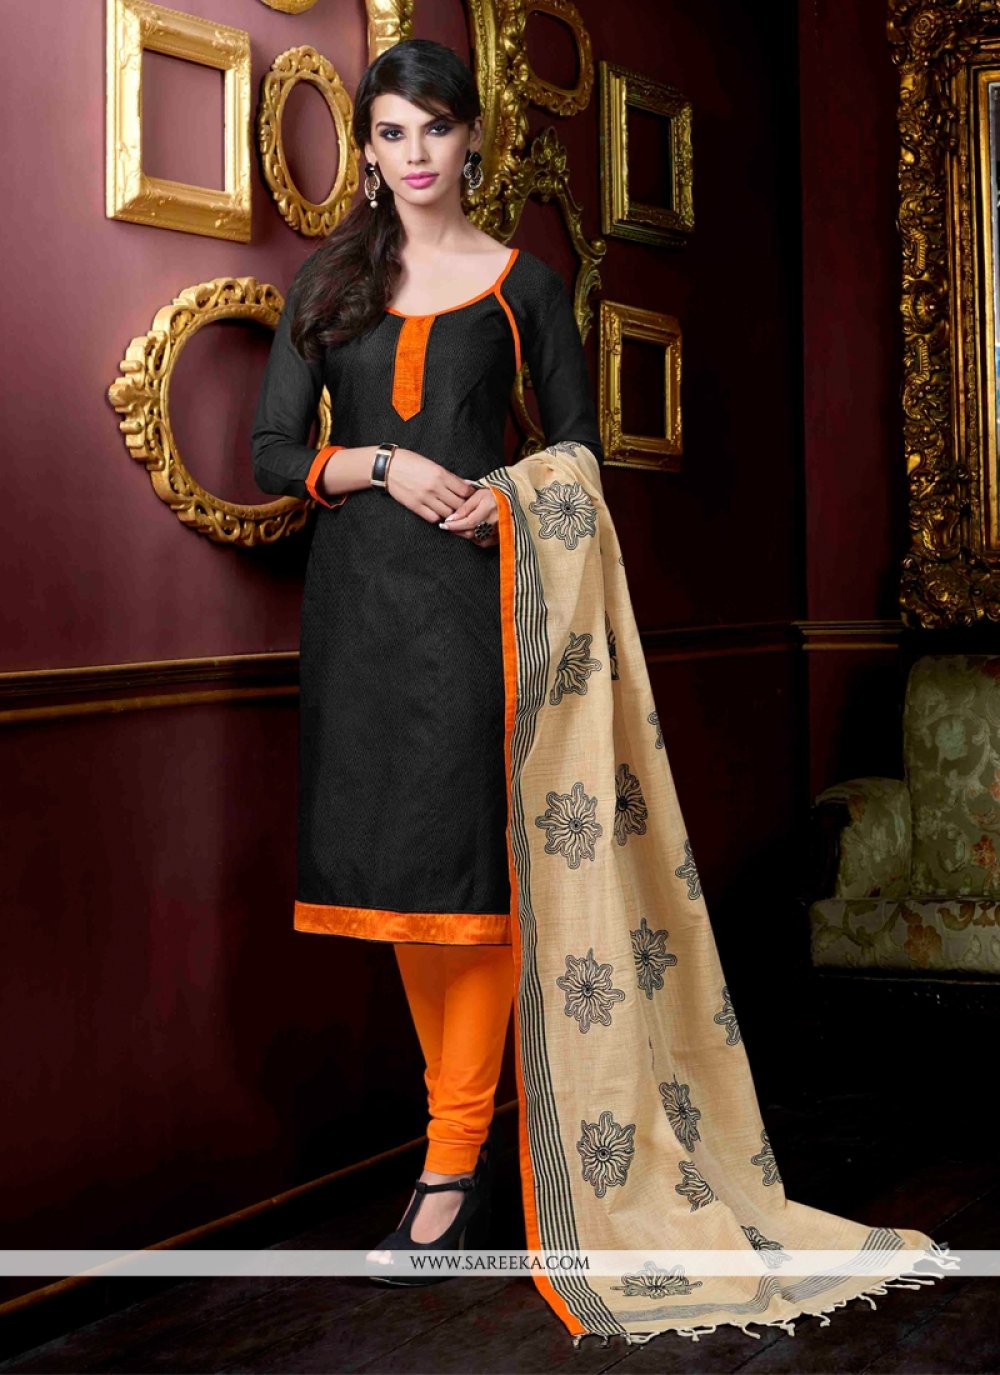 Buy Shree Cotton Contrast Yoke Churidar Black Salwar Suit Set at Amazon.in